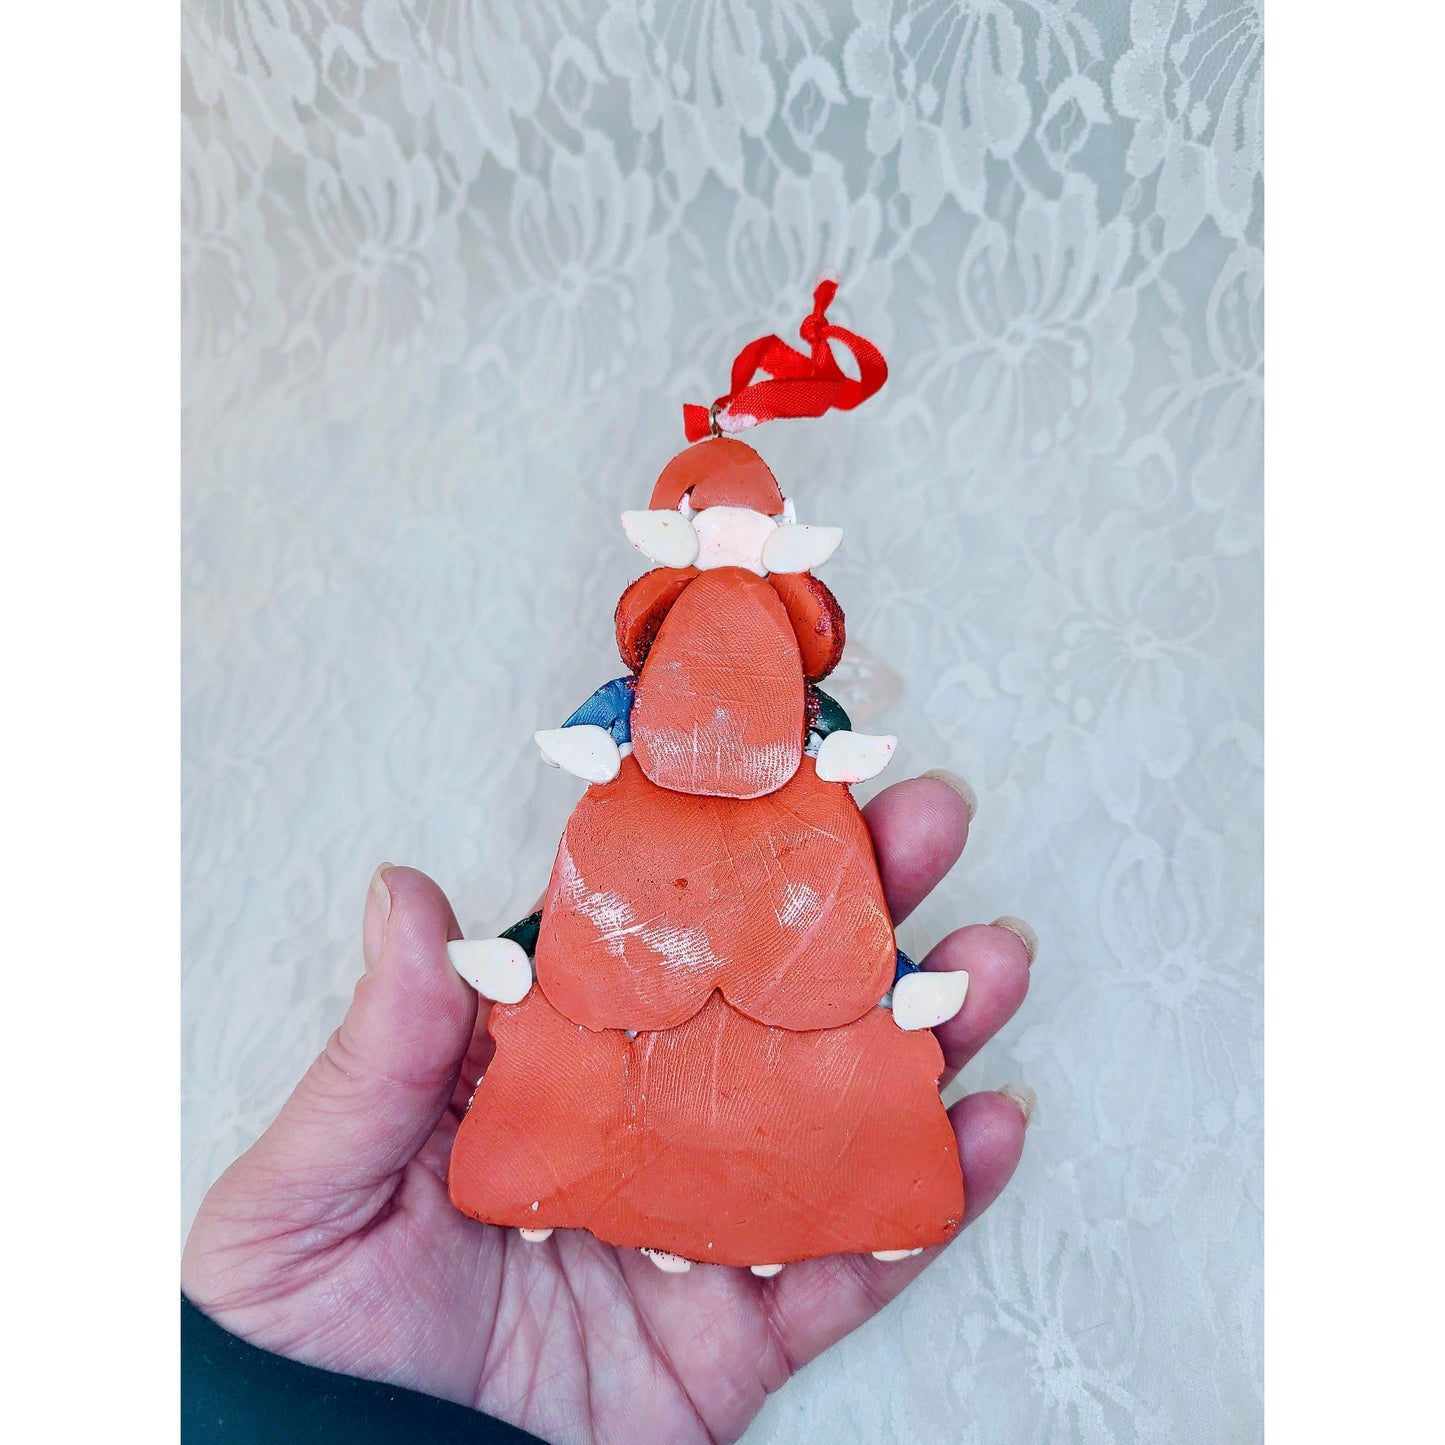 Handmade OOAK Christmas Caroling Santa Ornament ~ Rustic Christmas ~ Holiday Décor ~ Christmas Ornament